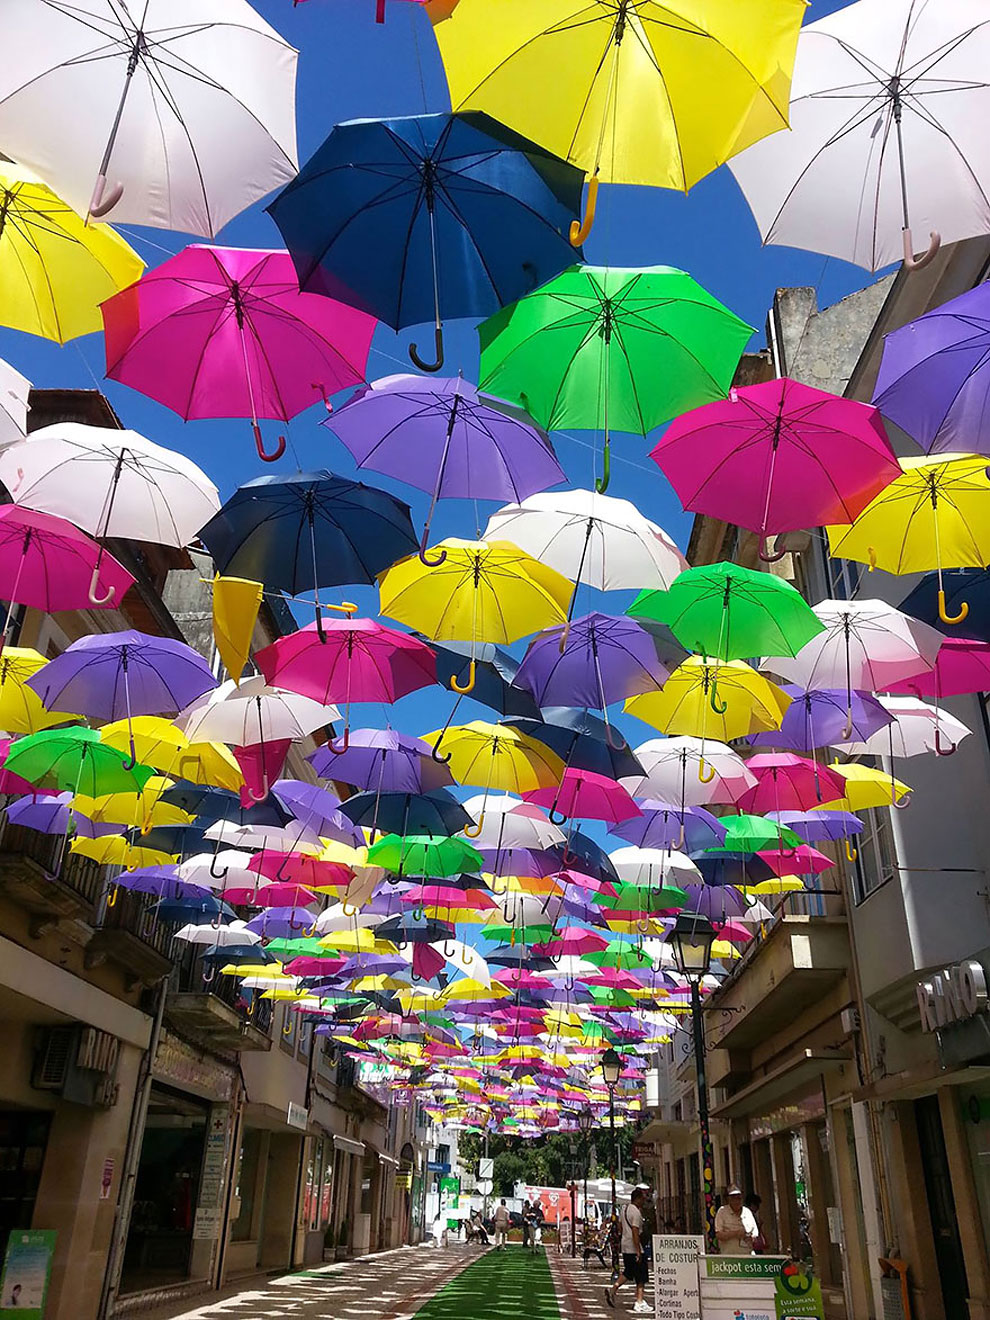 844 Umbrella Sky in Agueda, Portugal